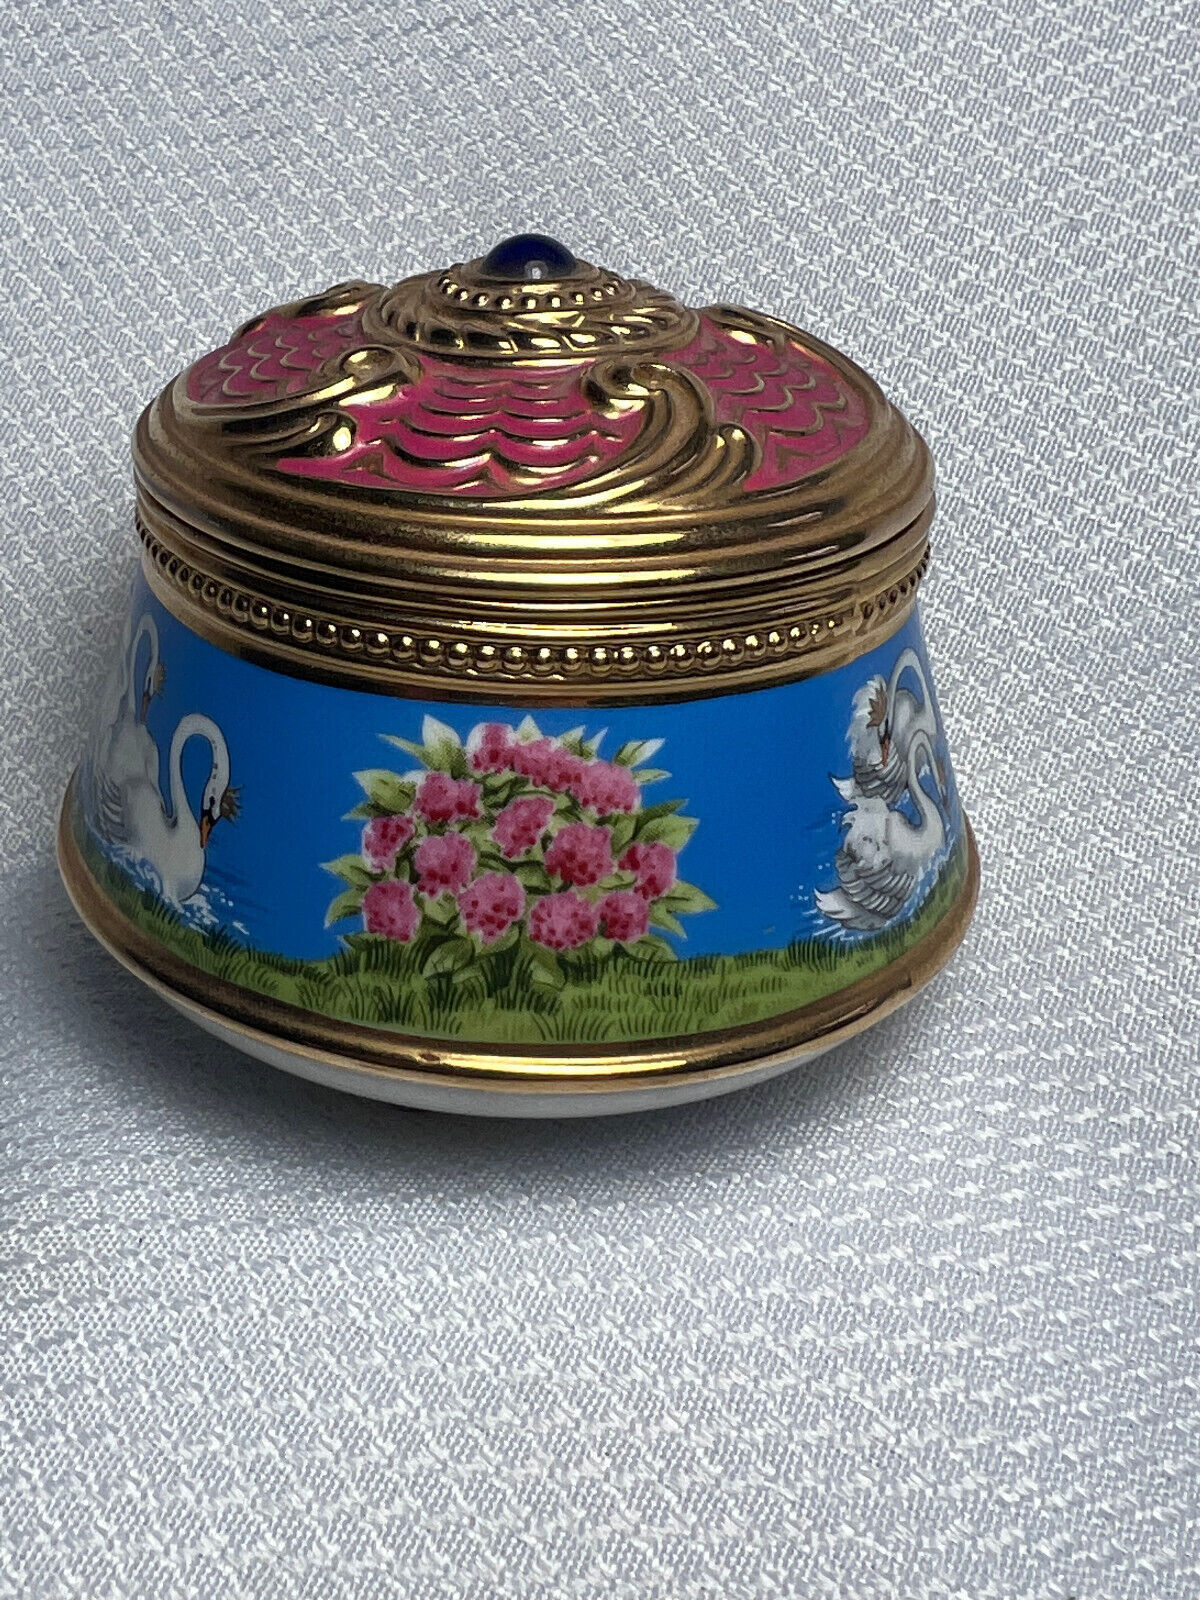 Franklin Mint Swan Lake Musical Felt Lined Ceramic Jewelry Trinket Dresser Box - $29.95